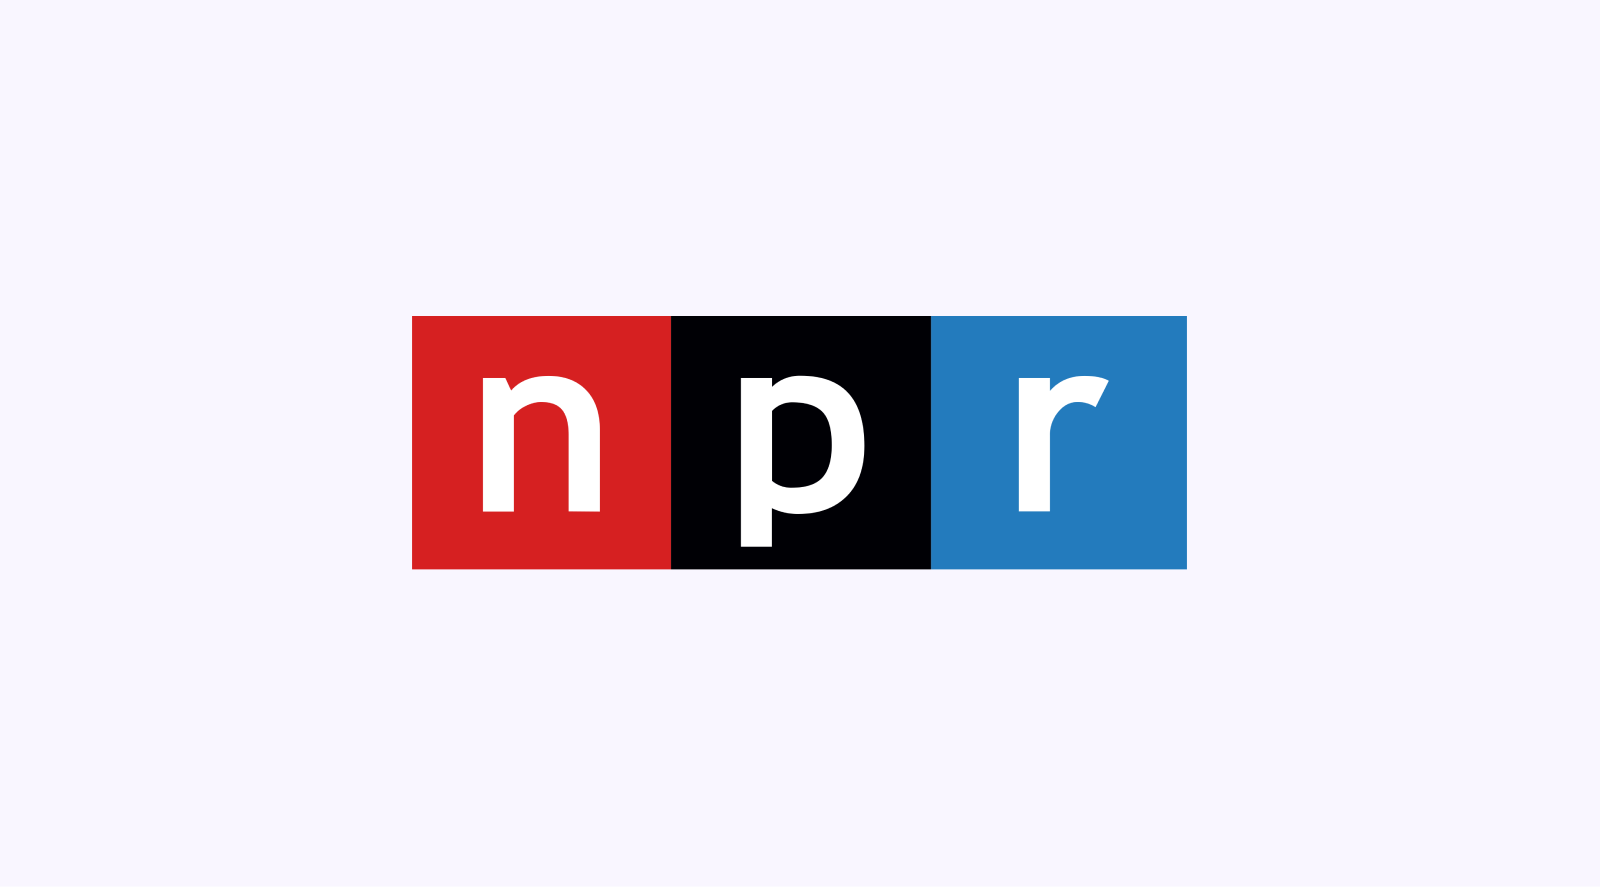 NPR logo on a light red background. 